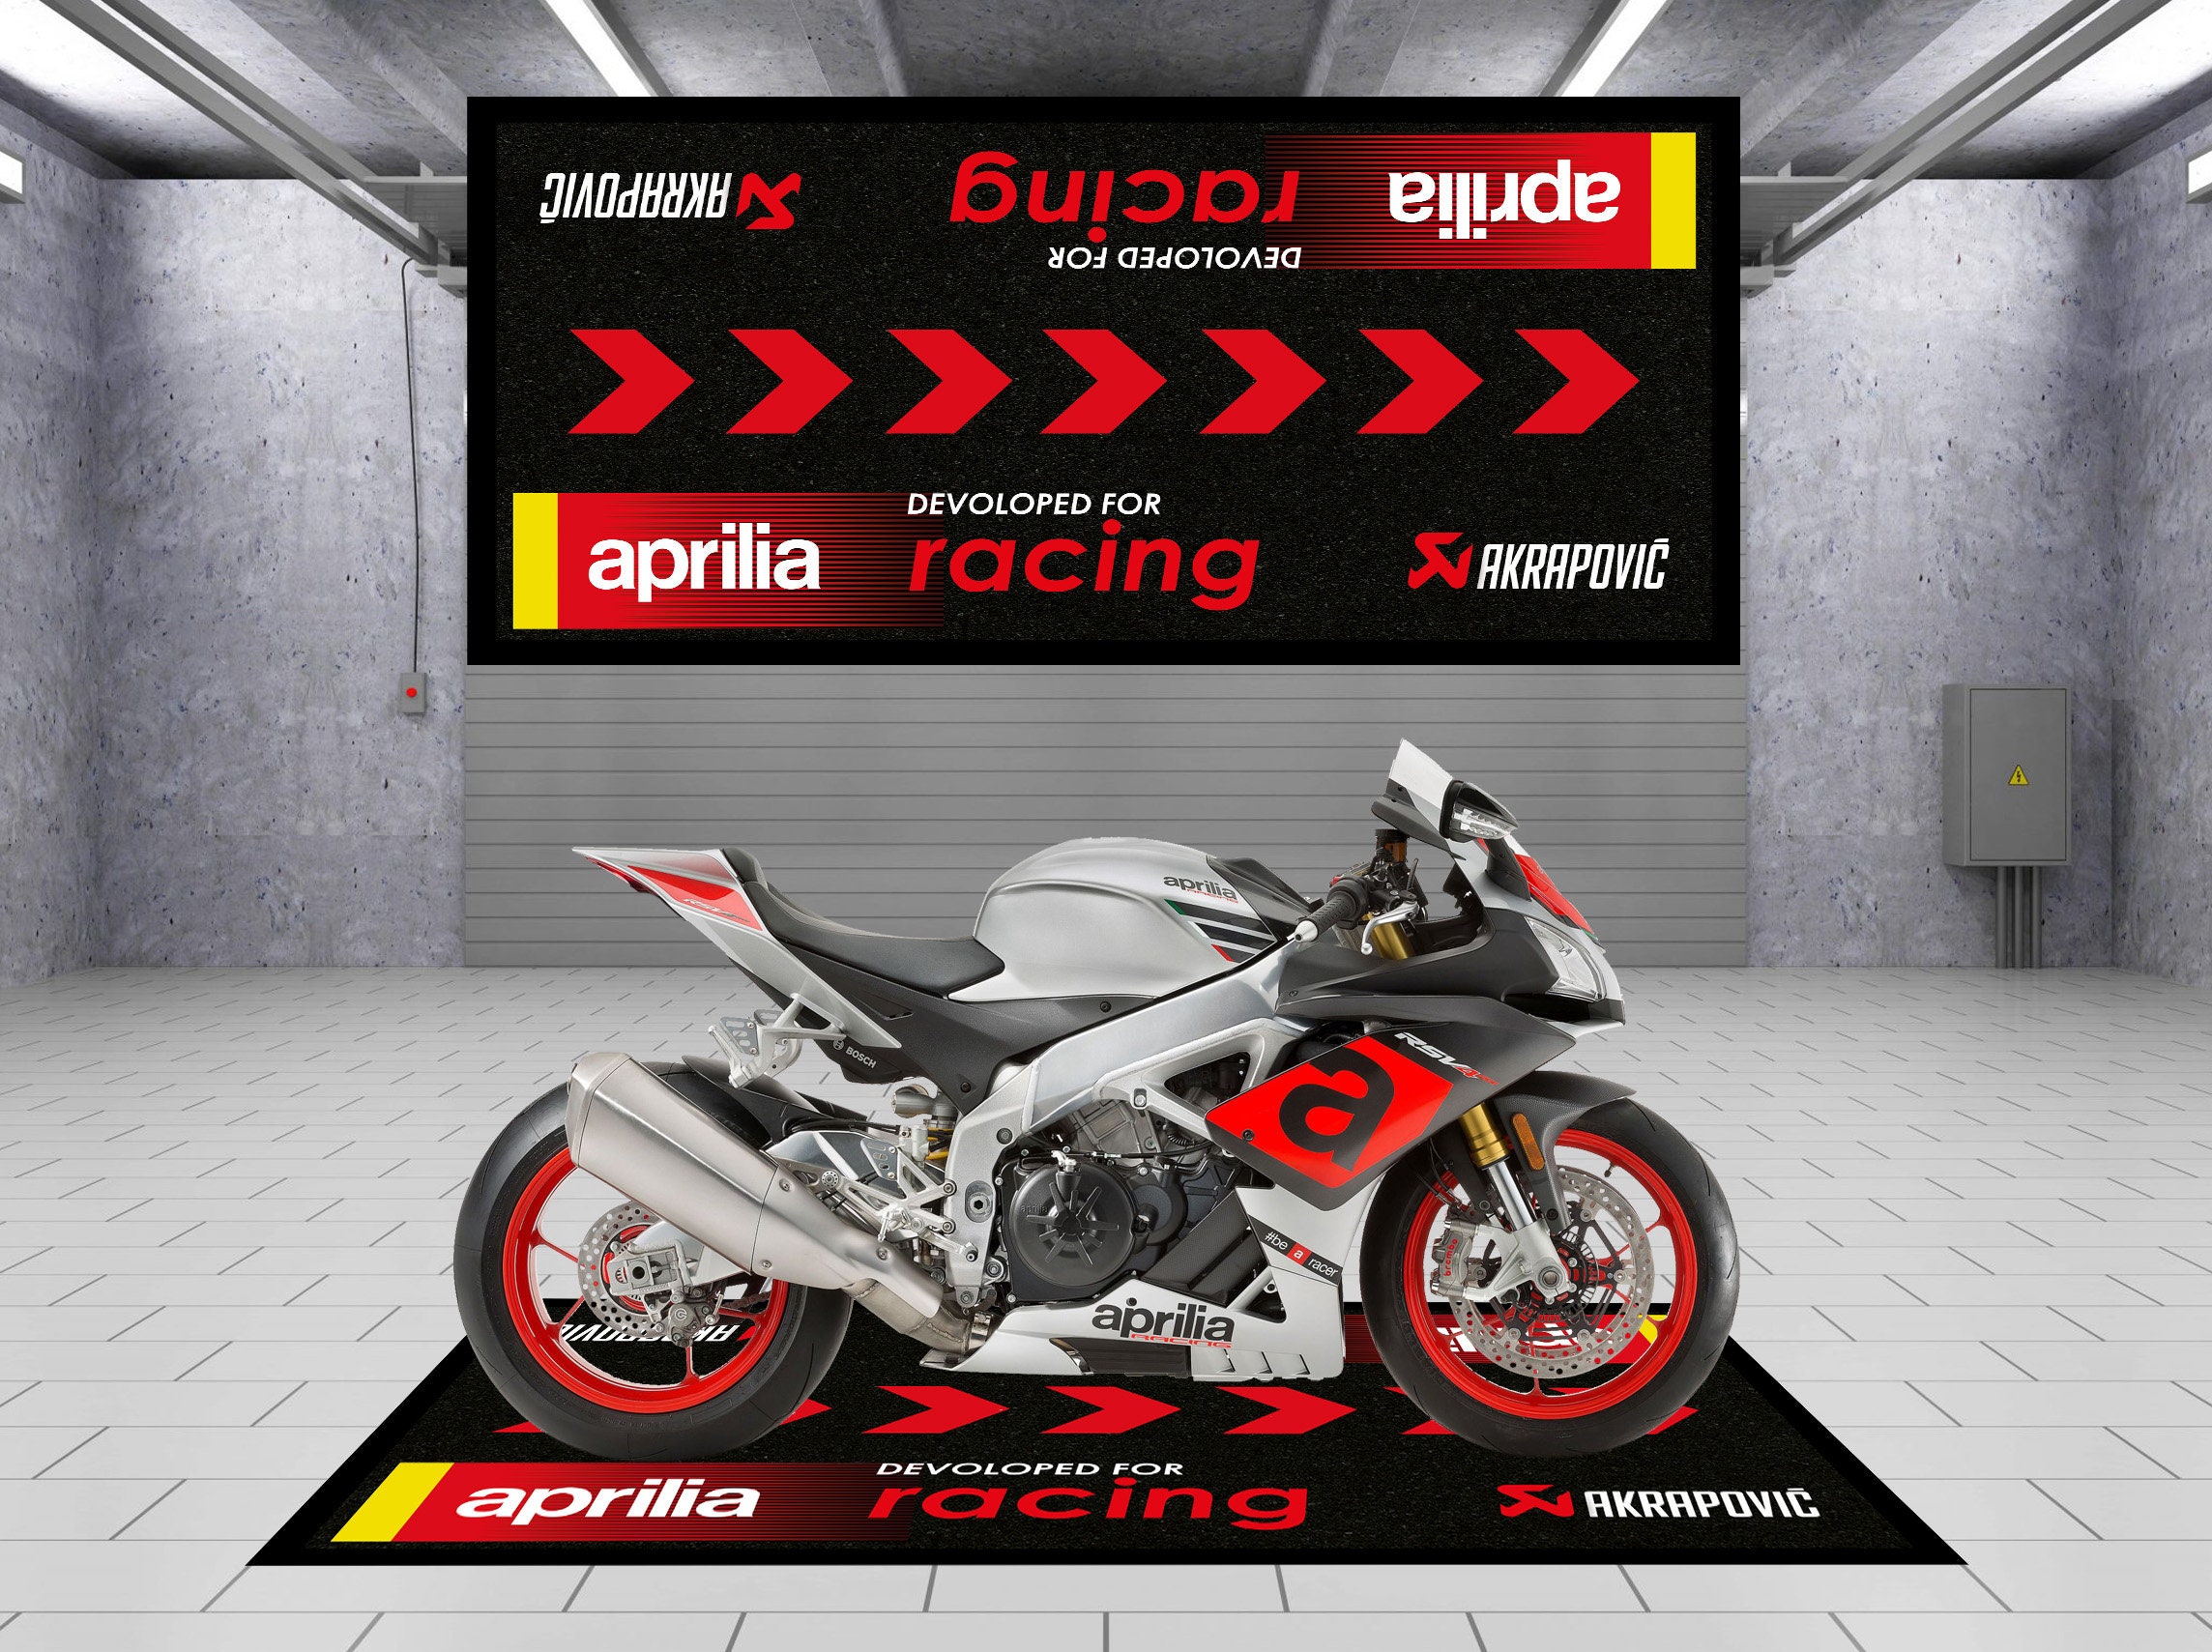 Aprilia aprilia Racing - schwarz - Aufnäher Shop / Patch - Shop